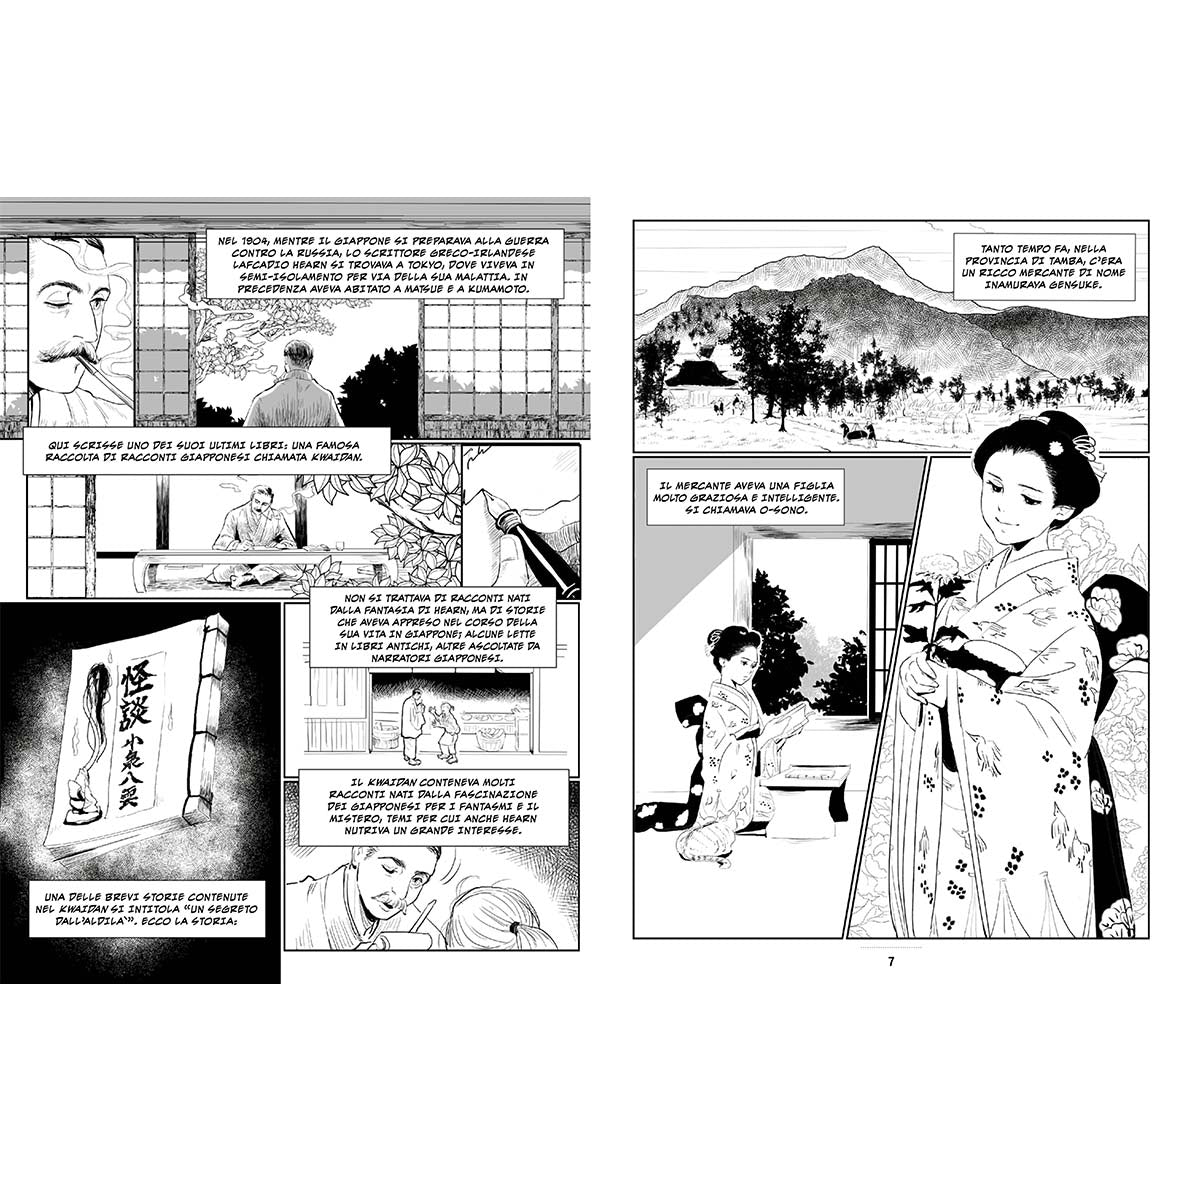 Manga - Storie di yōkai. Racconti di spiriti giapponesi